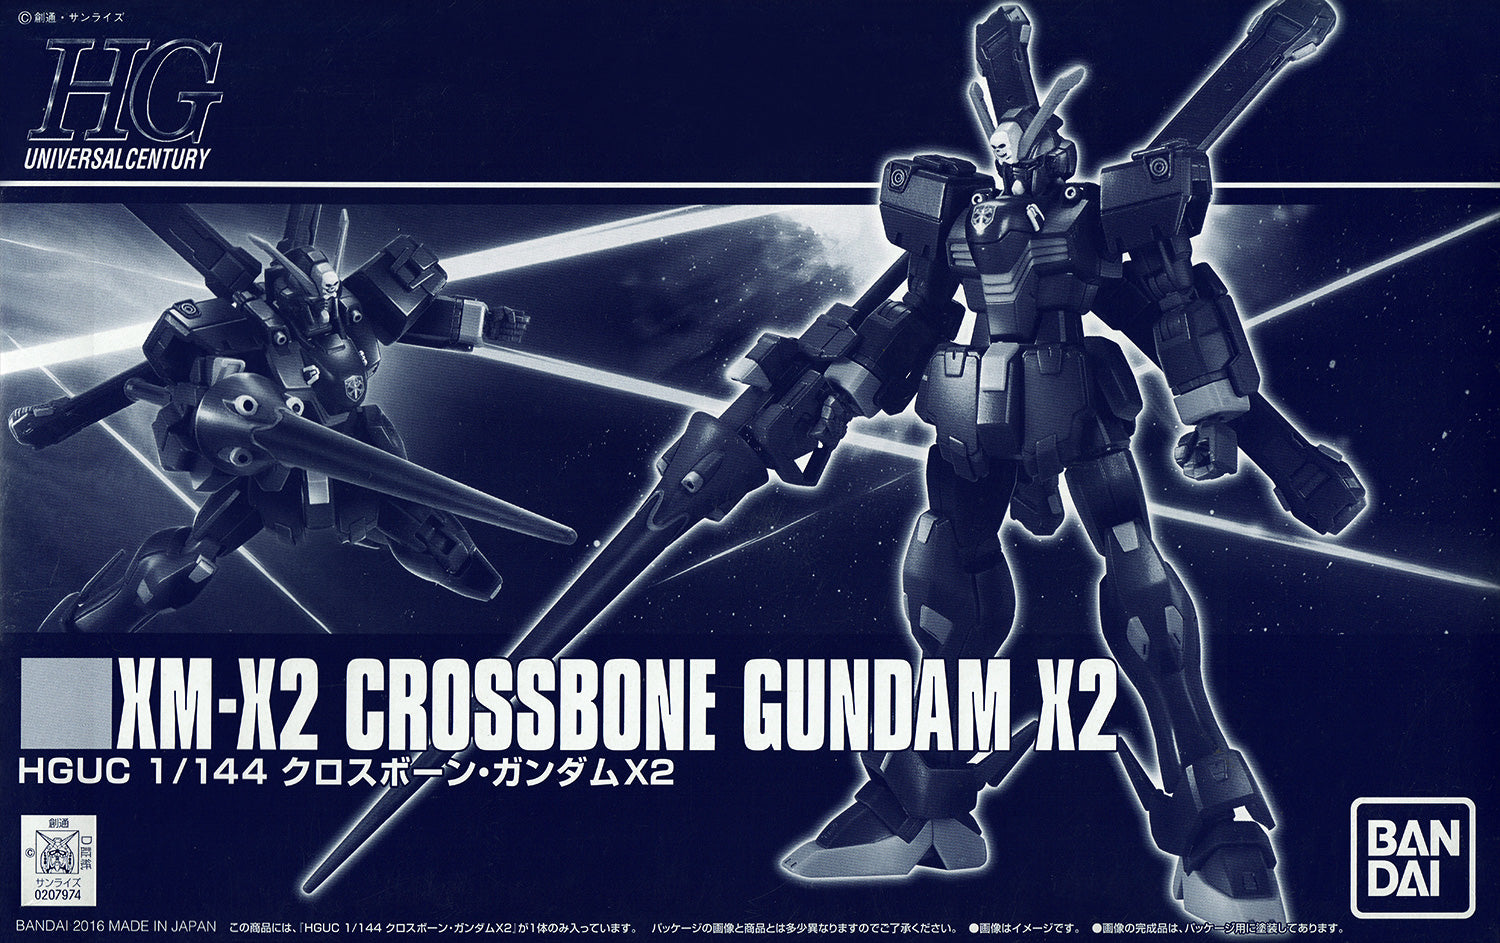 HGUC - XM-X2 Crossbone Gundam X2